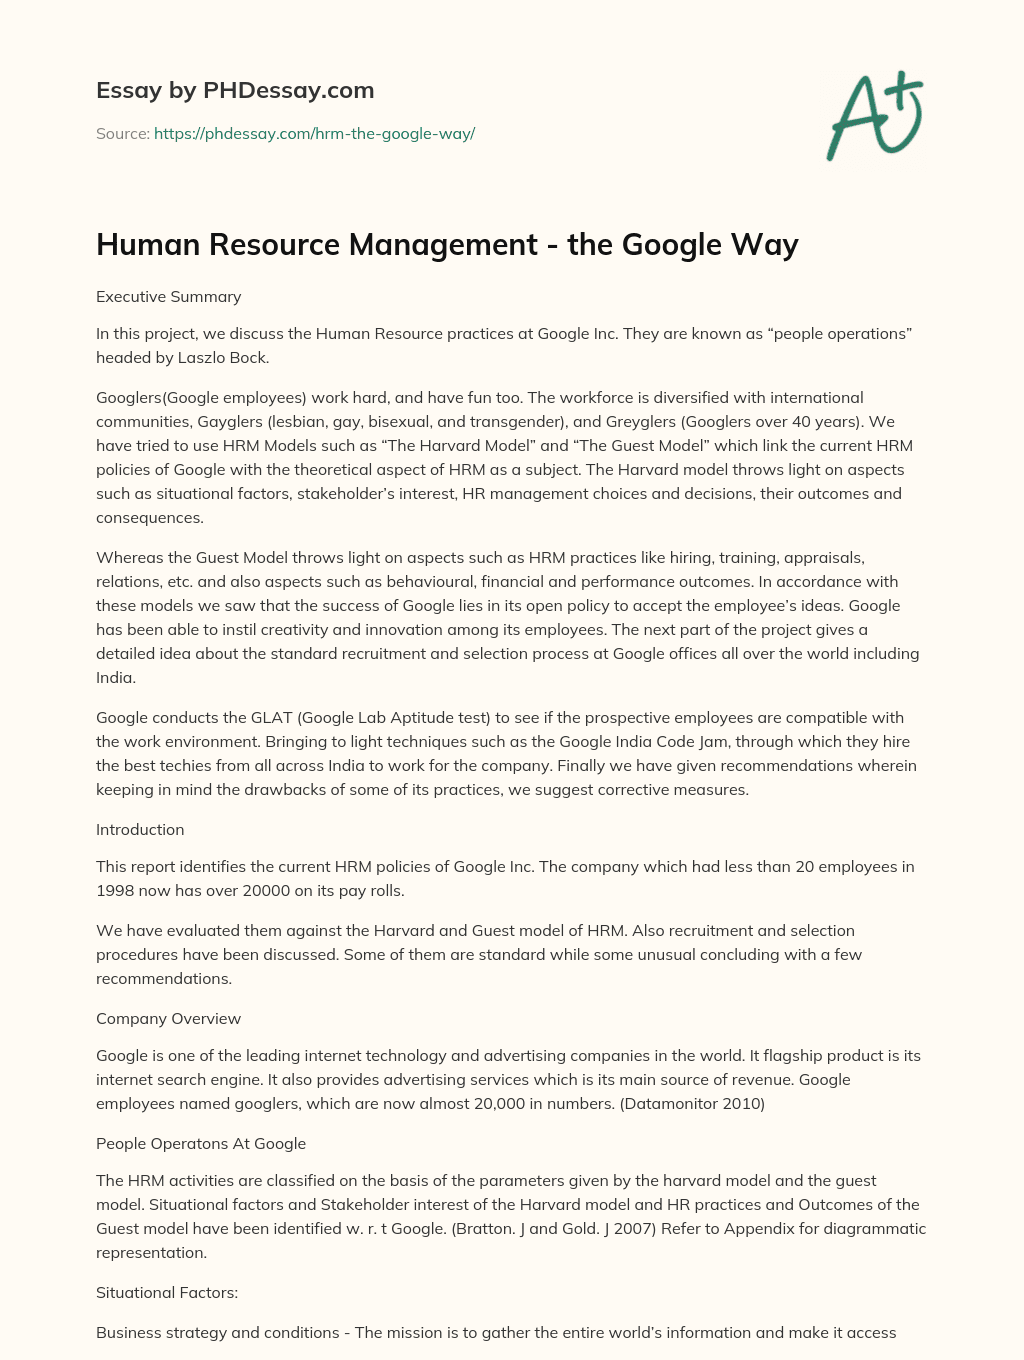 Human Resource Management – the Google Way essay